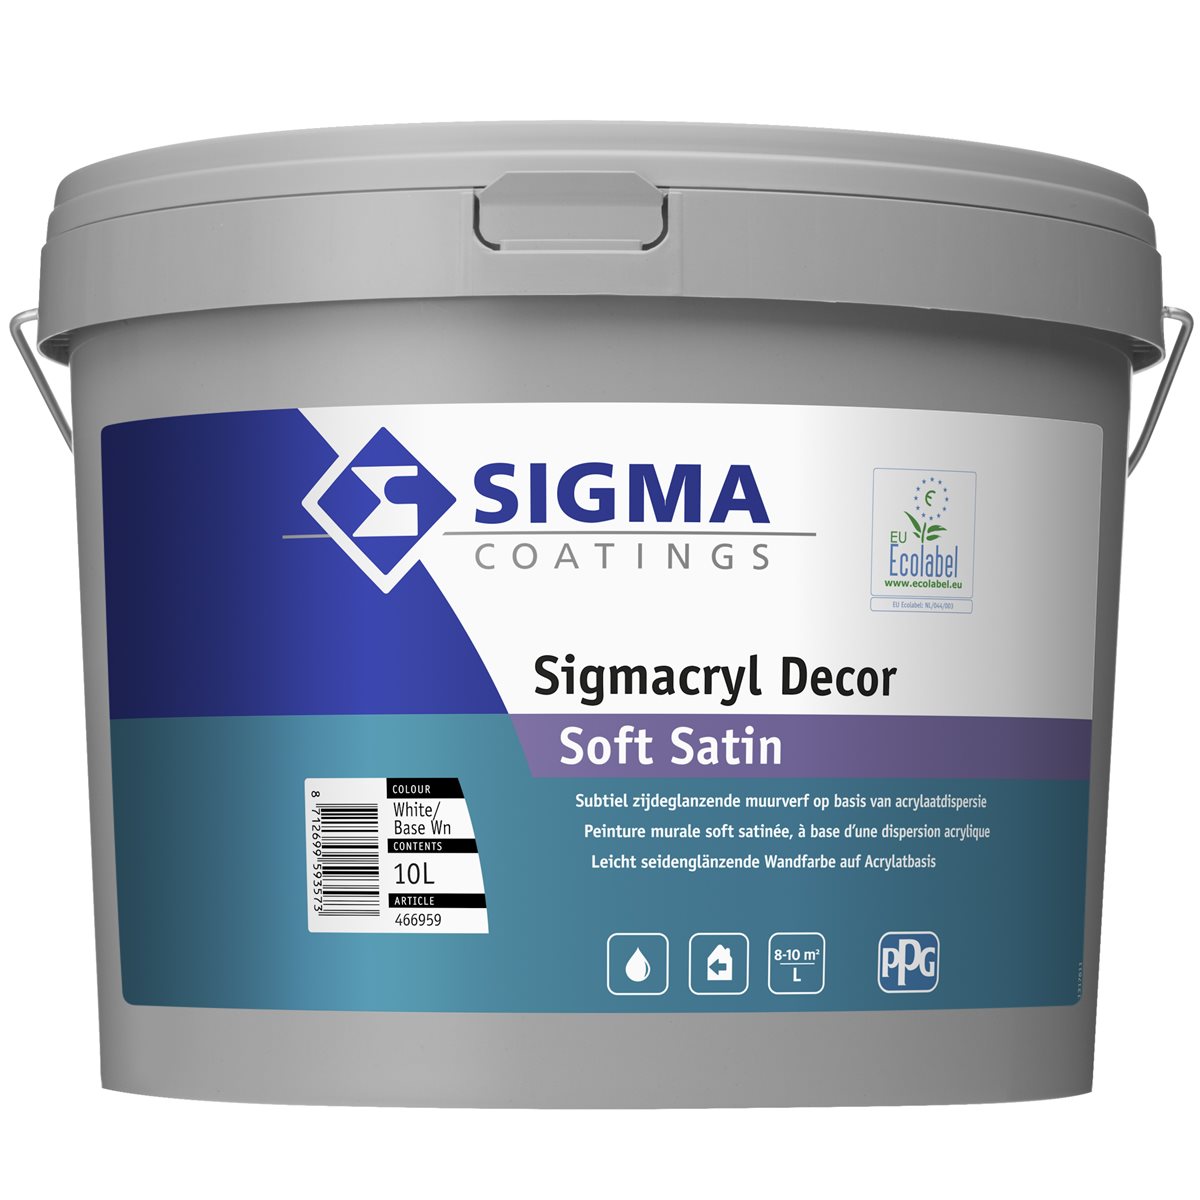 Sigmacryl Decor Soft Satin